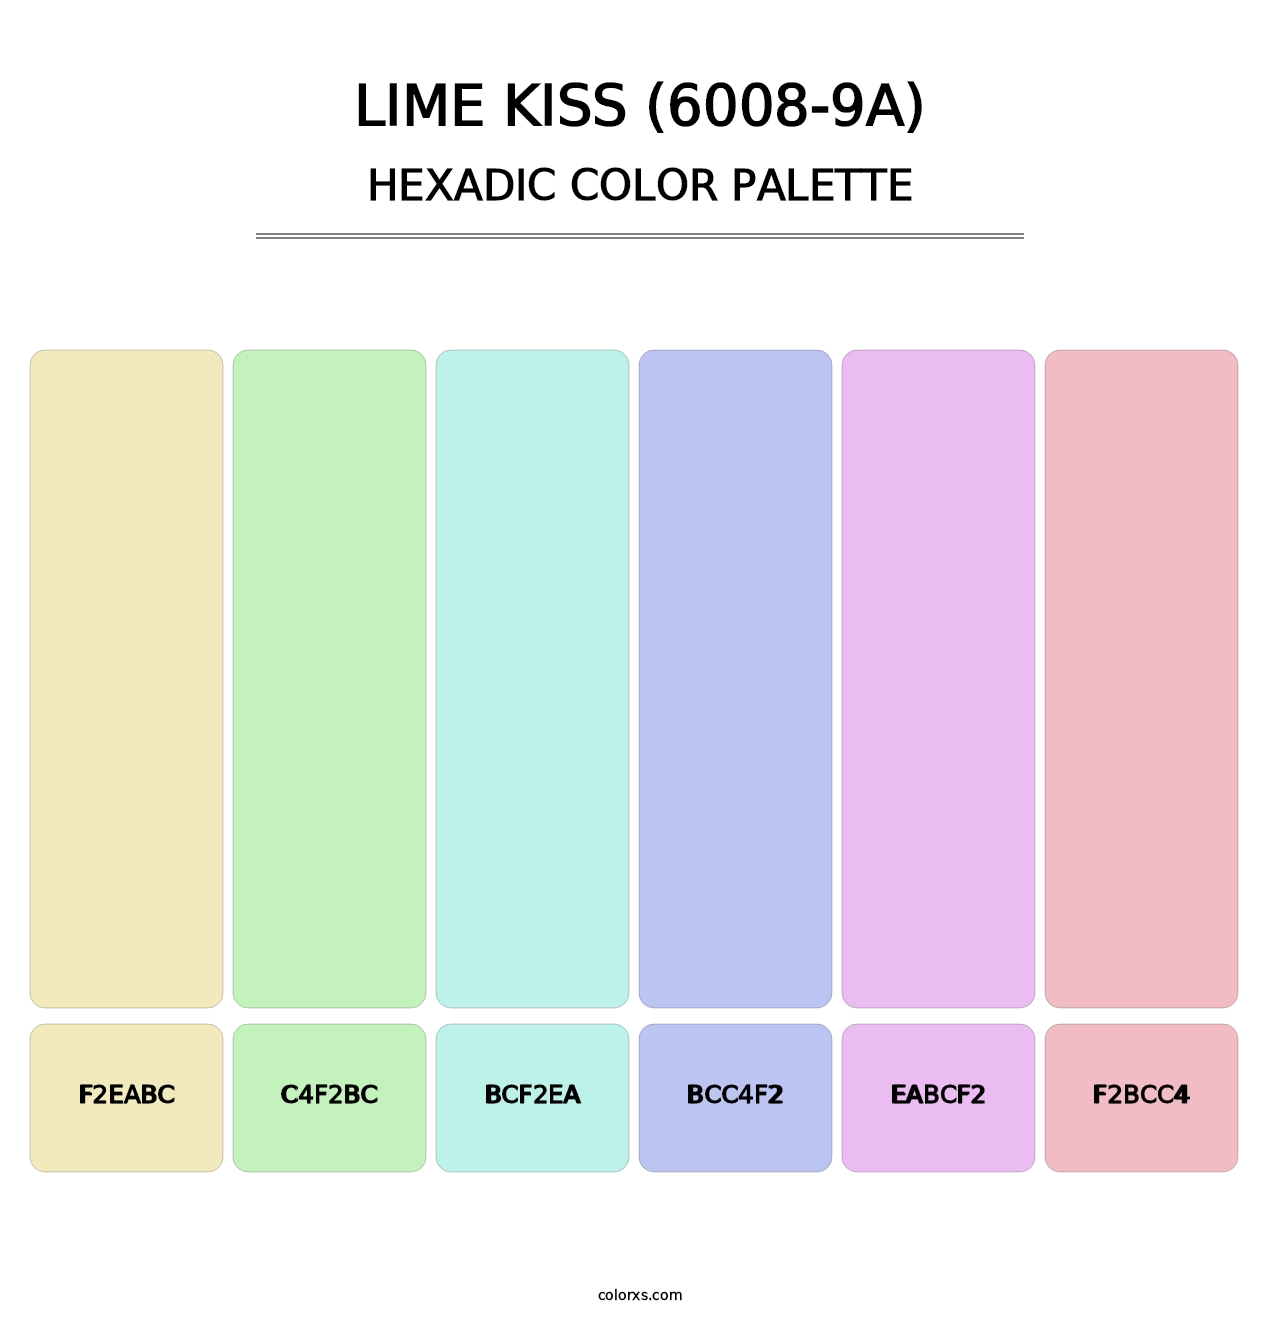 Lime Kiss (6008-9A) - Hexadic Color Palette